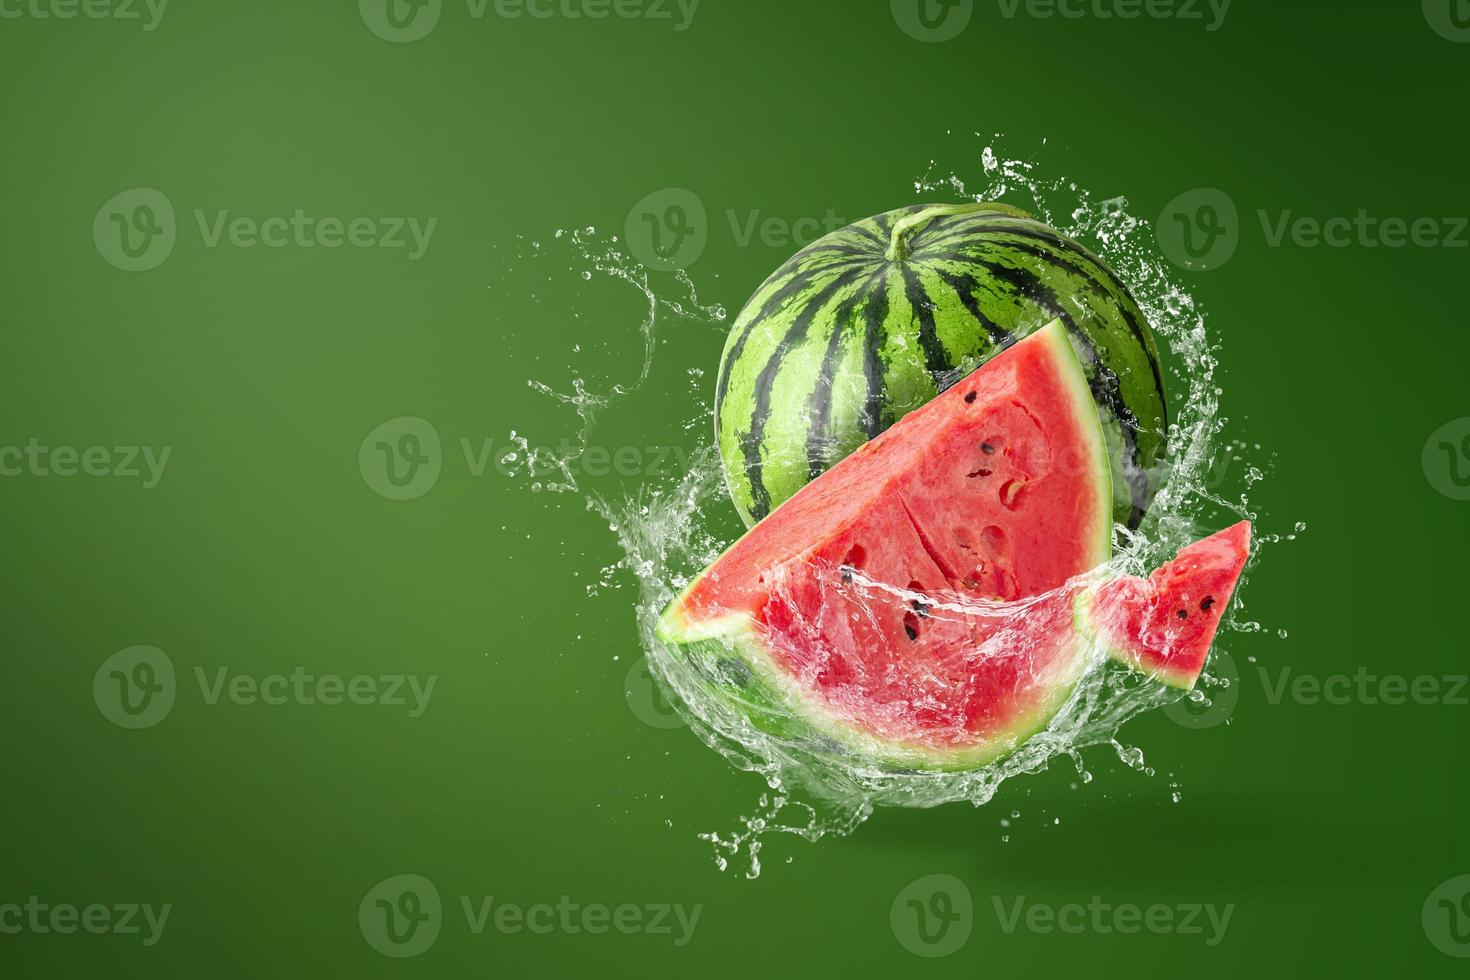 Water splashing on Sliced of watermelon on green background photo